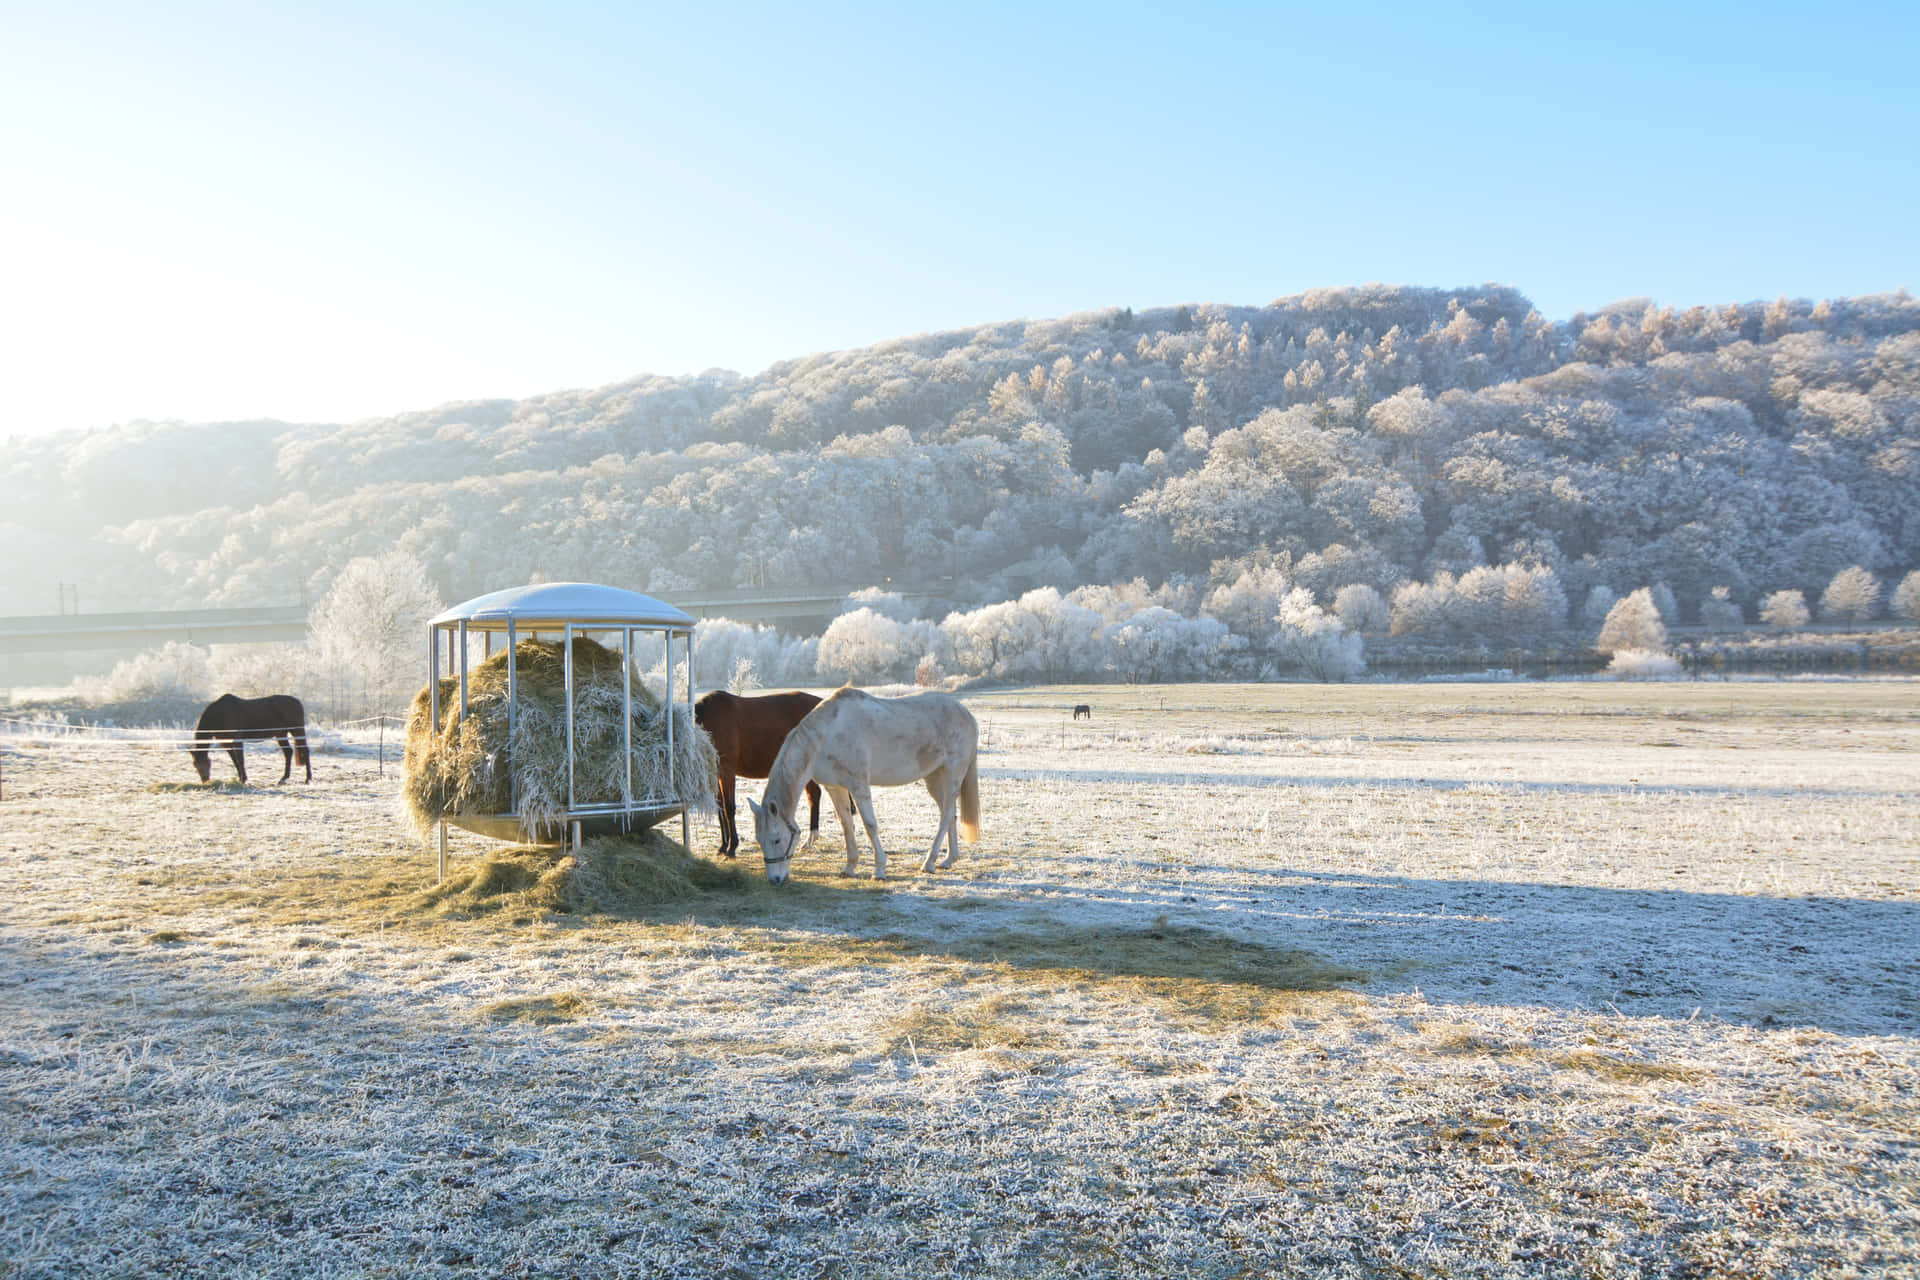 A stunning sight - a landscape of grazing horses